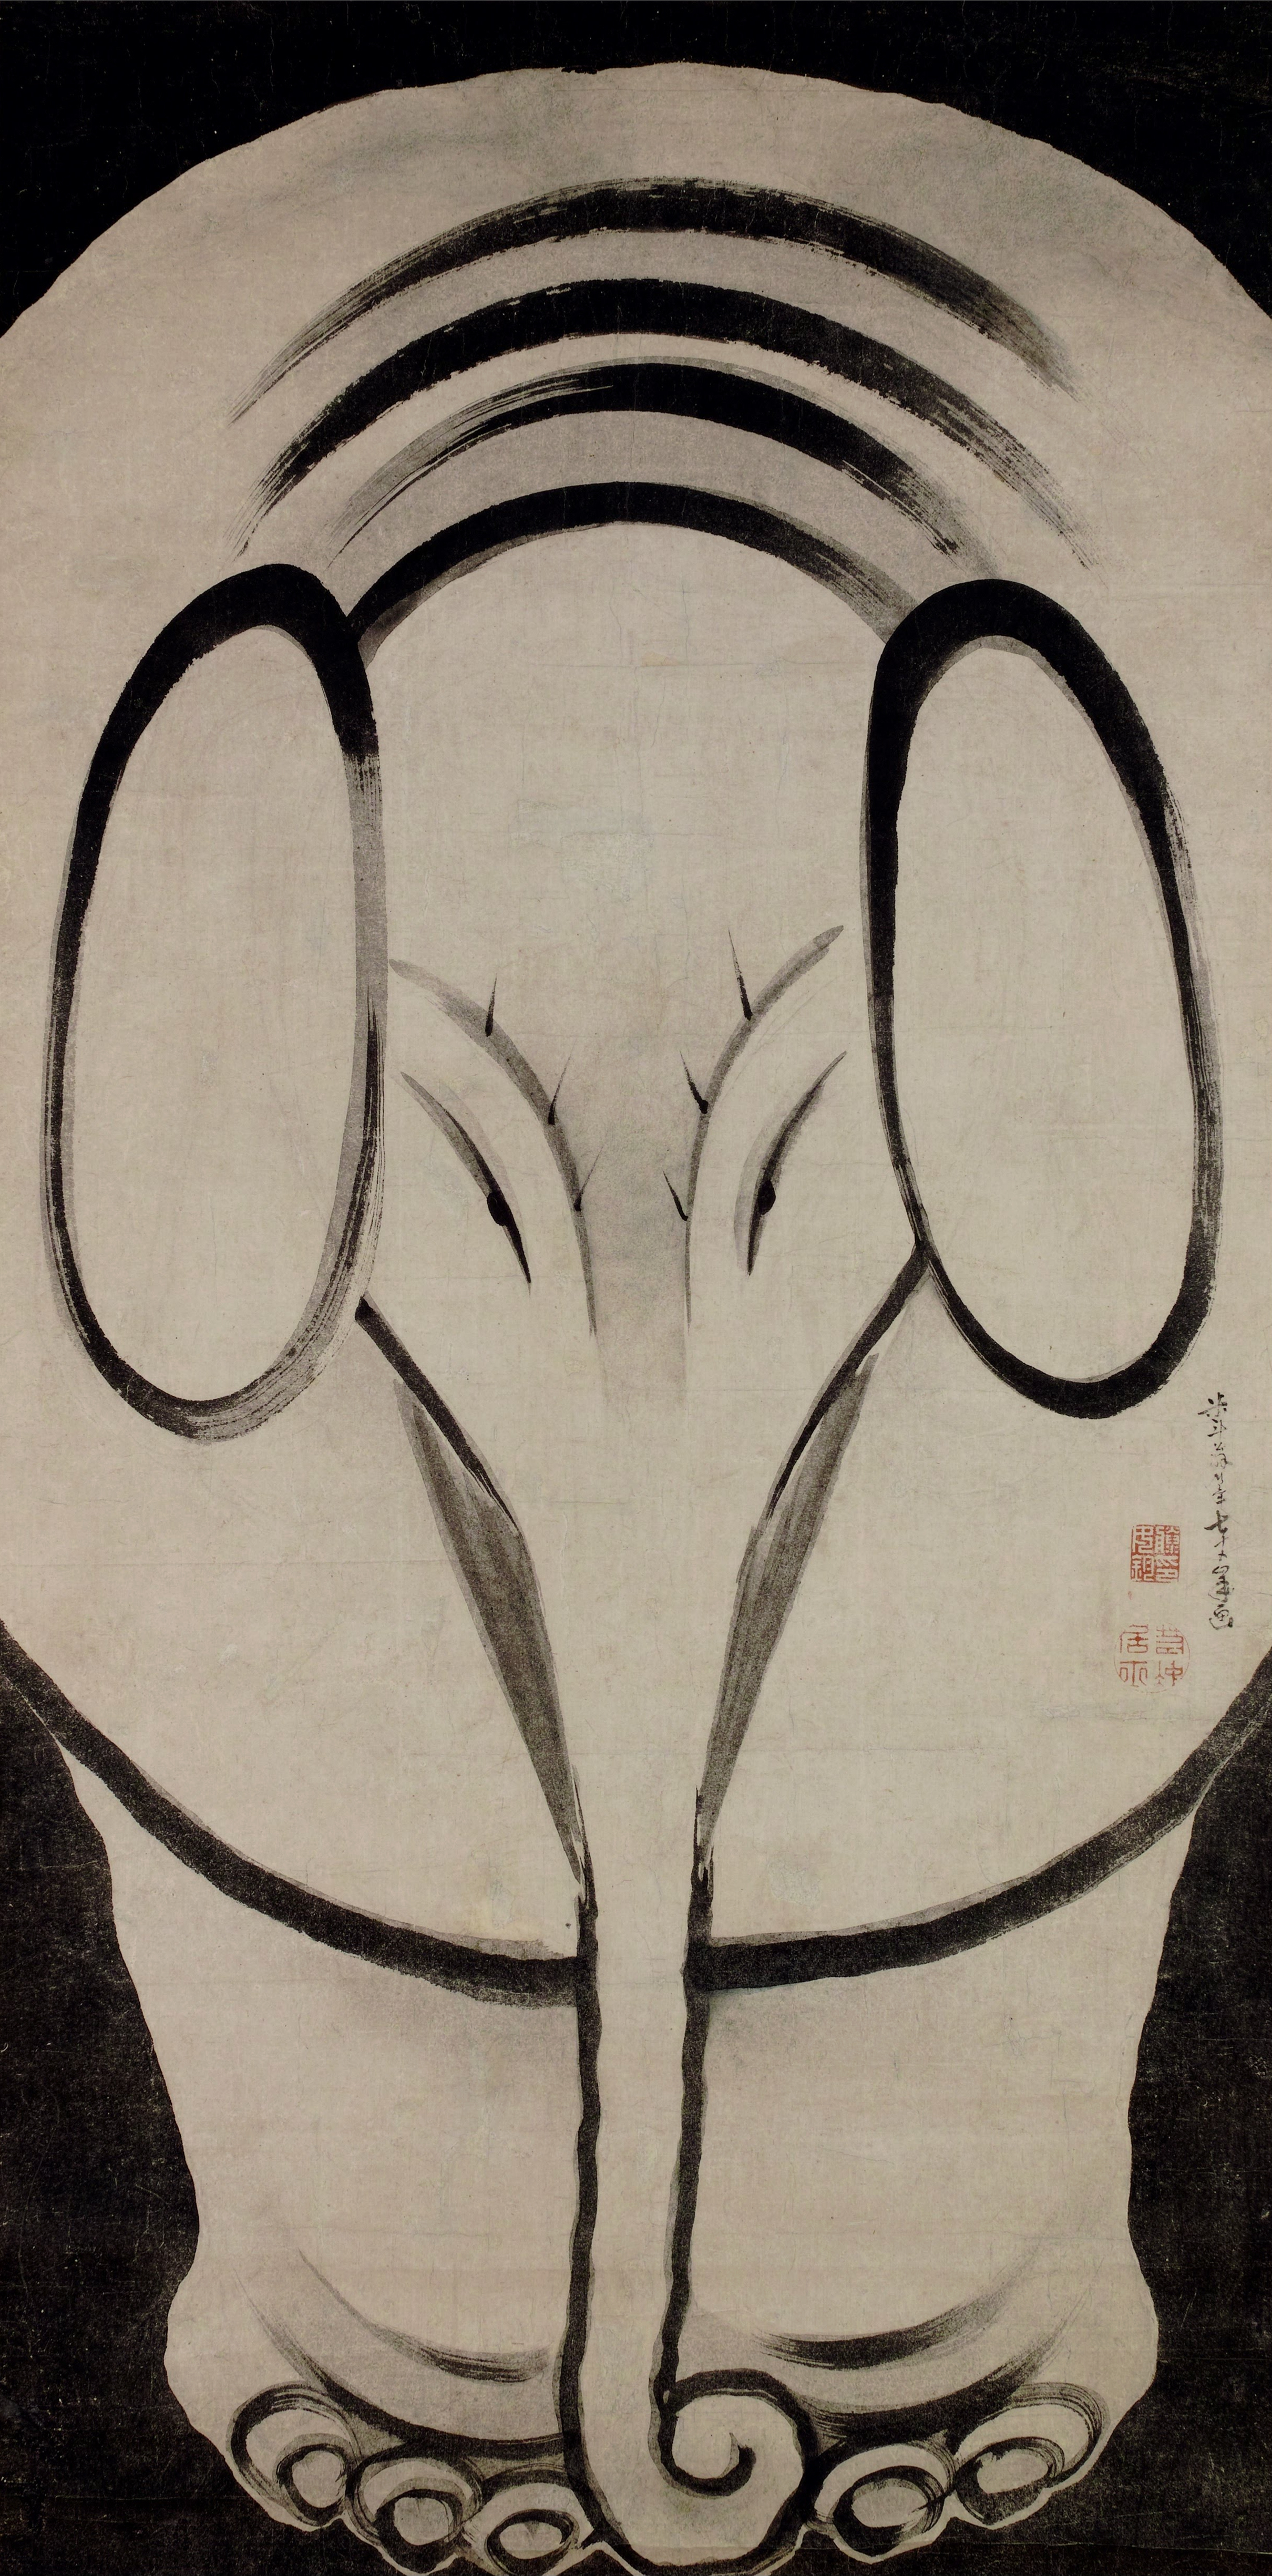 Elephant by Itō Jakuchū - 1790 - 155.5 cm × 77.3cm Tokyo Fuji Art Museum